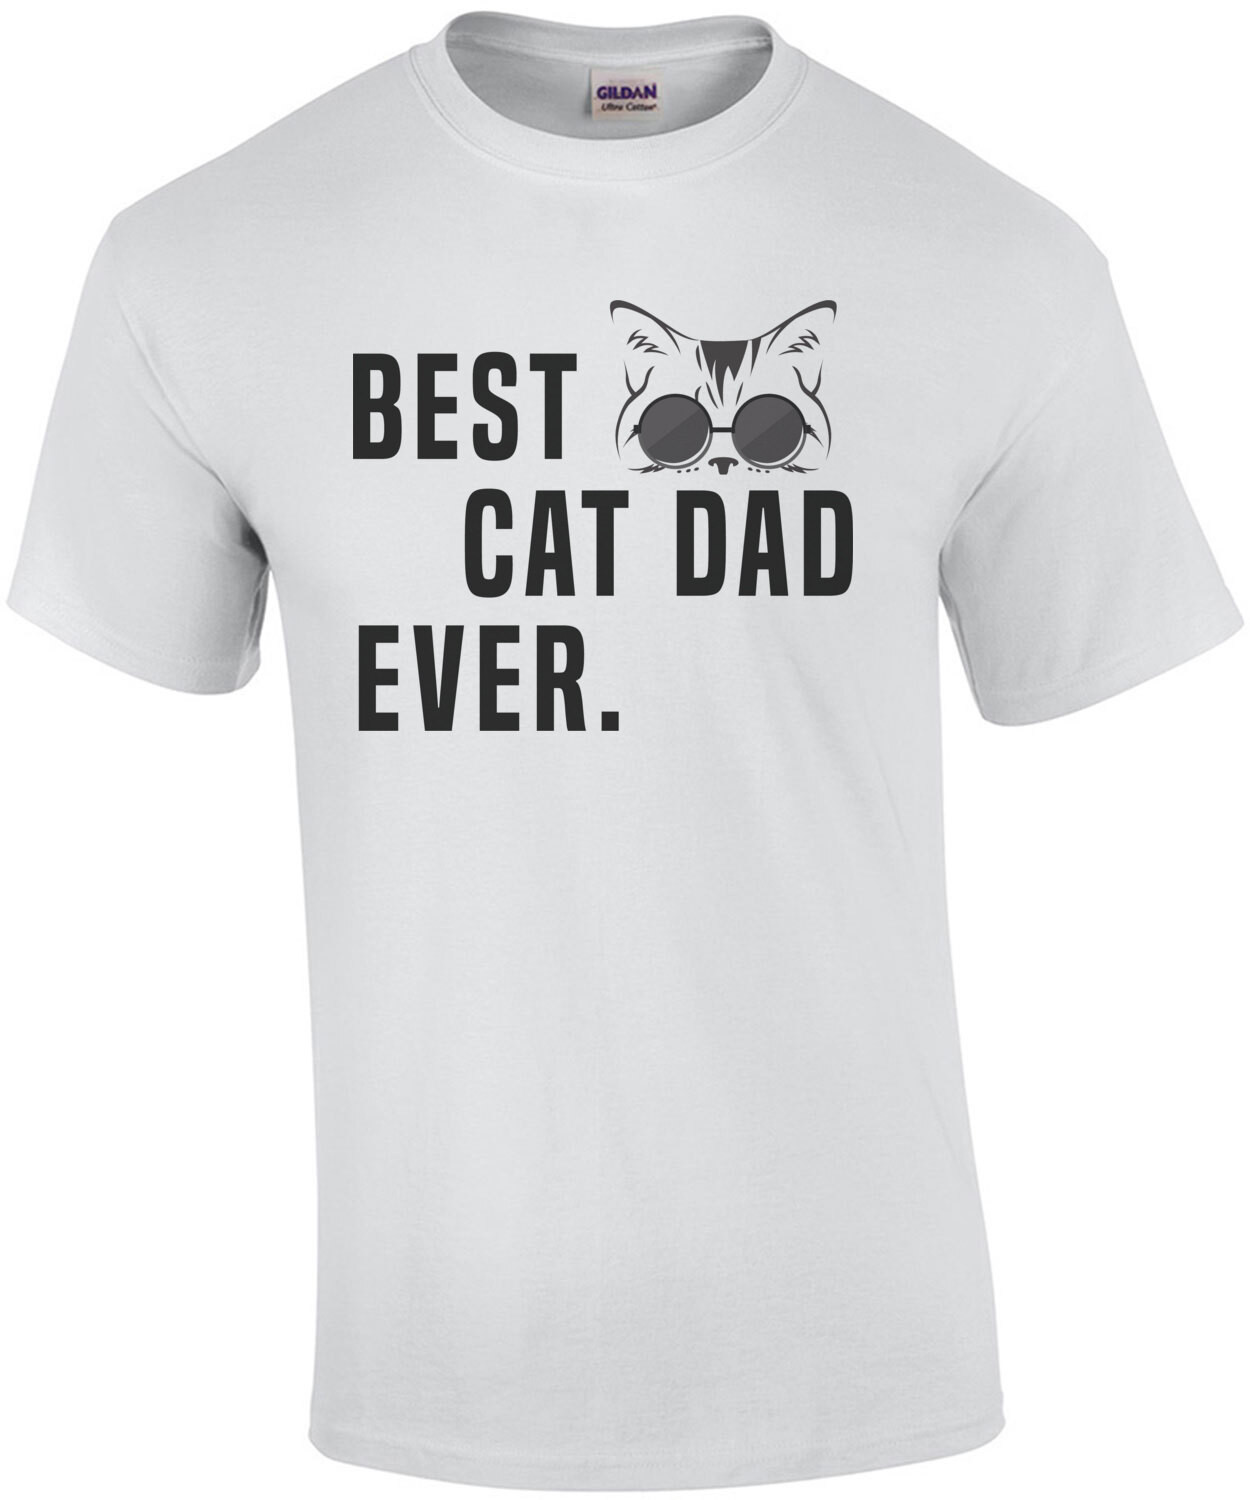 Best Cat Dad Ever - Funny Cat T-Shirt